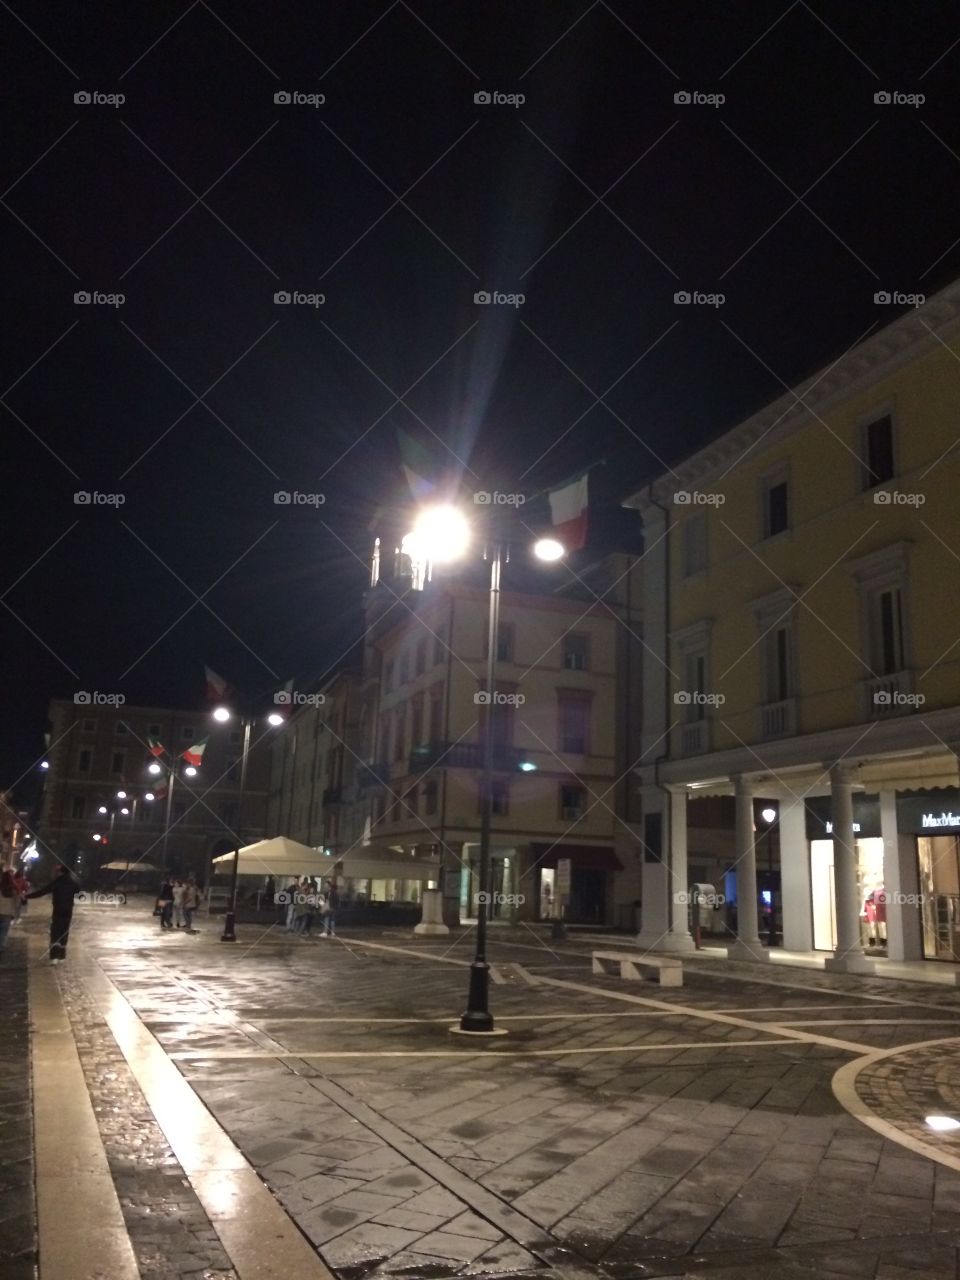 Rimini's street